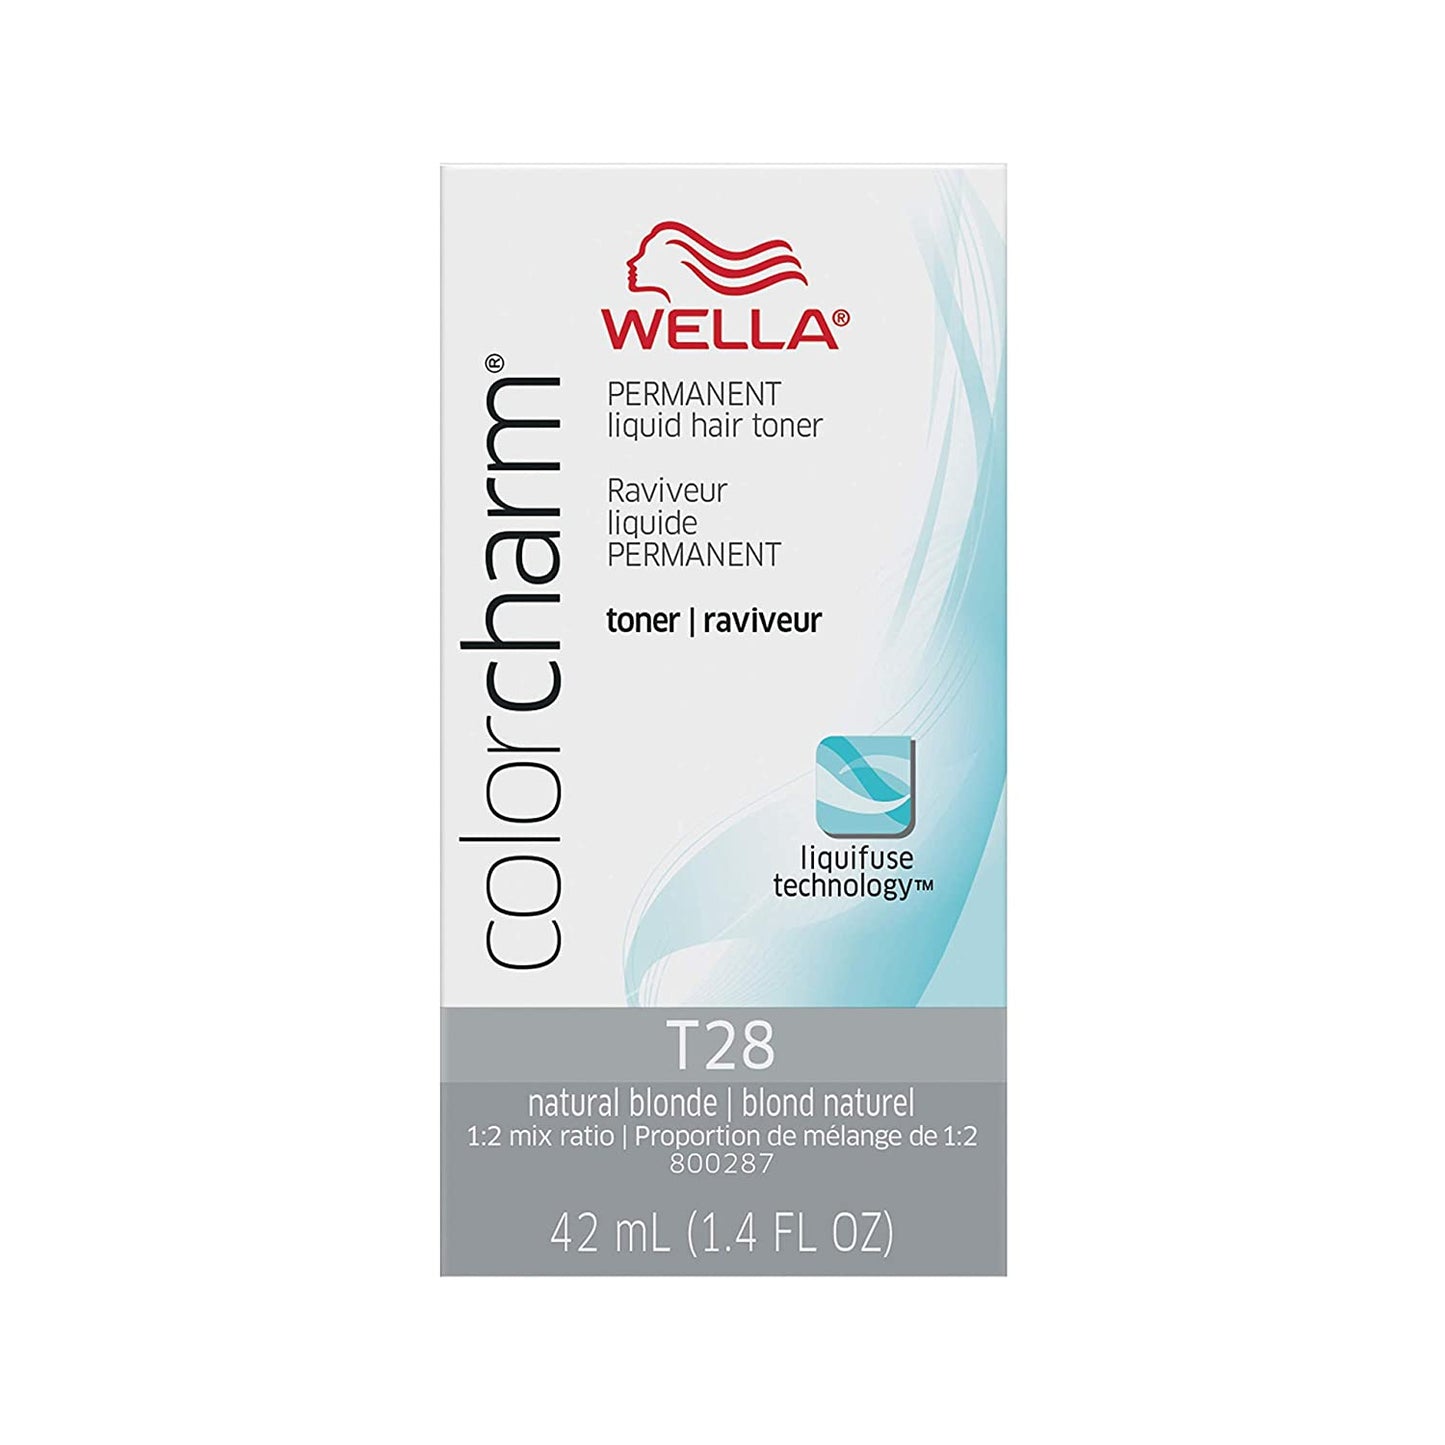 Wella: colorcharm liquid hair toner